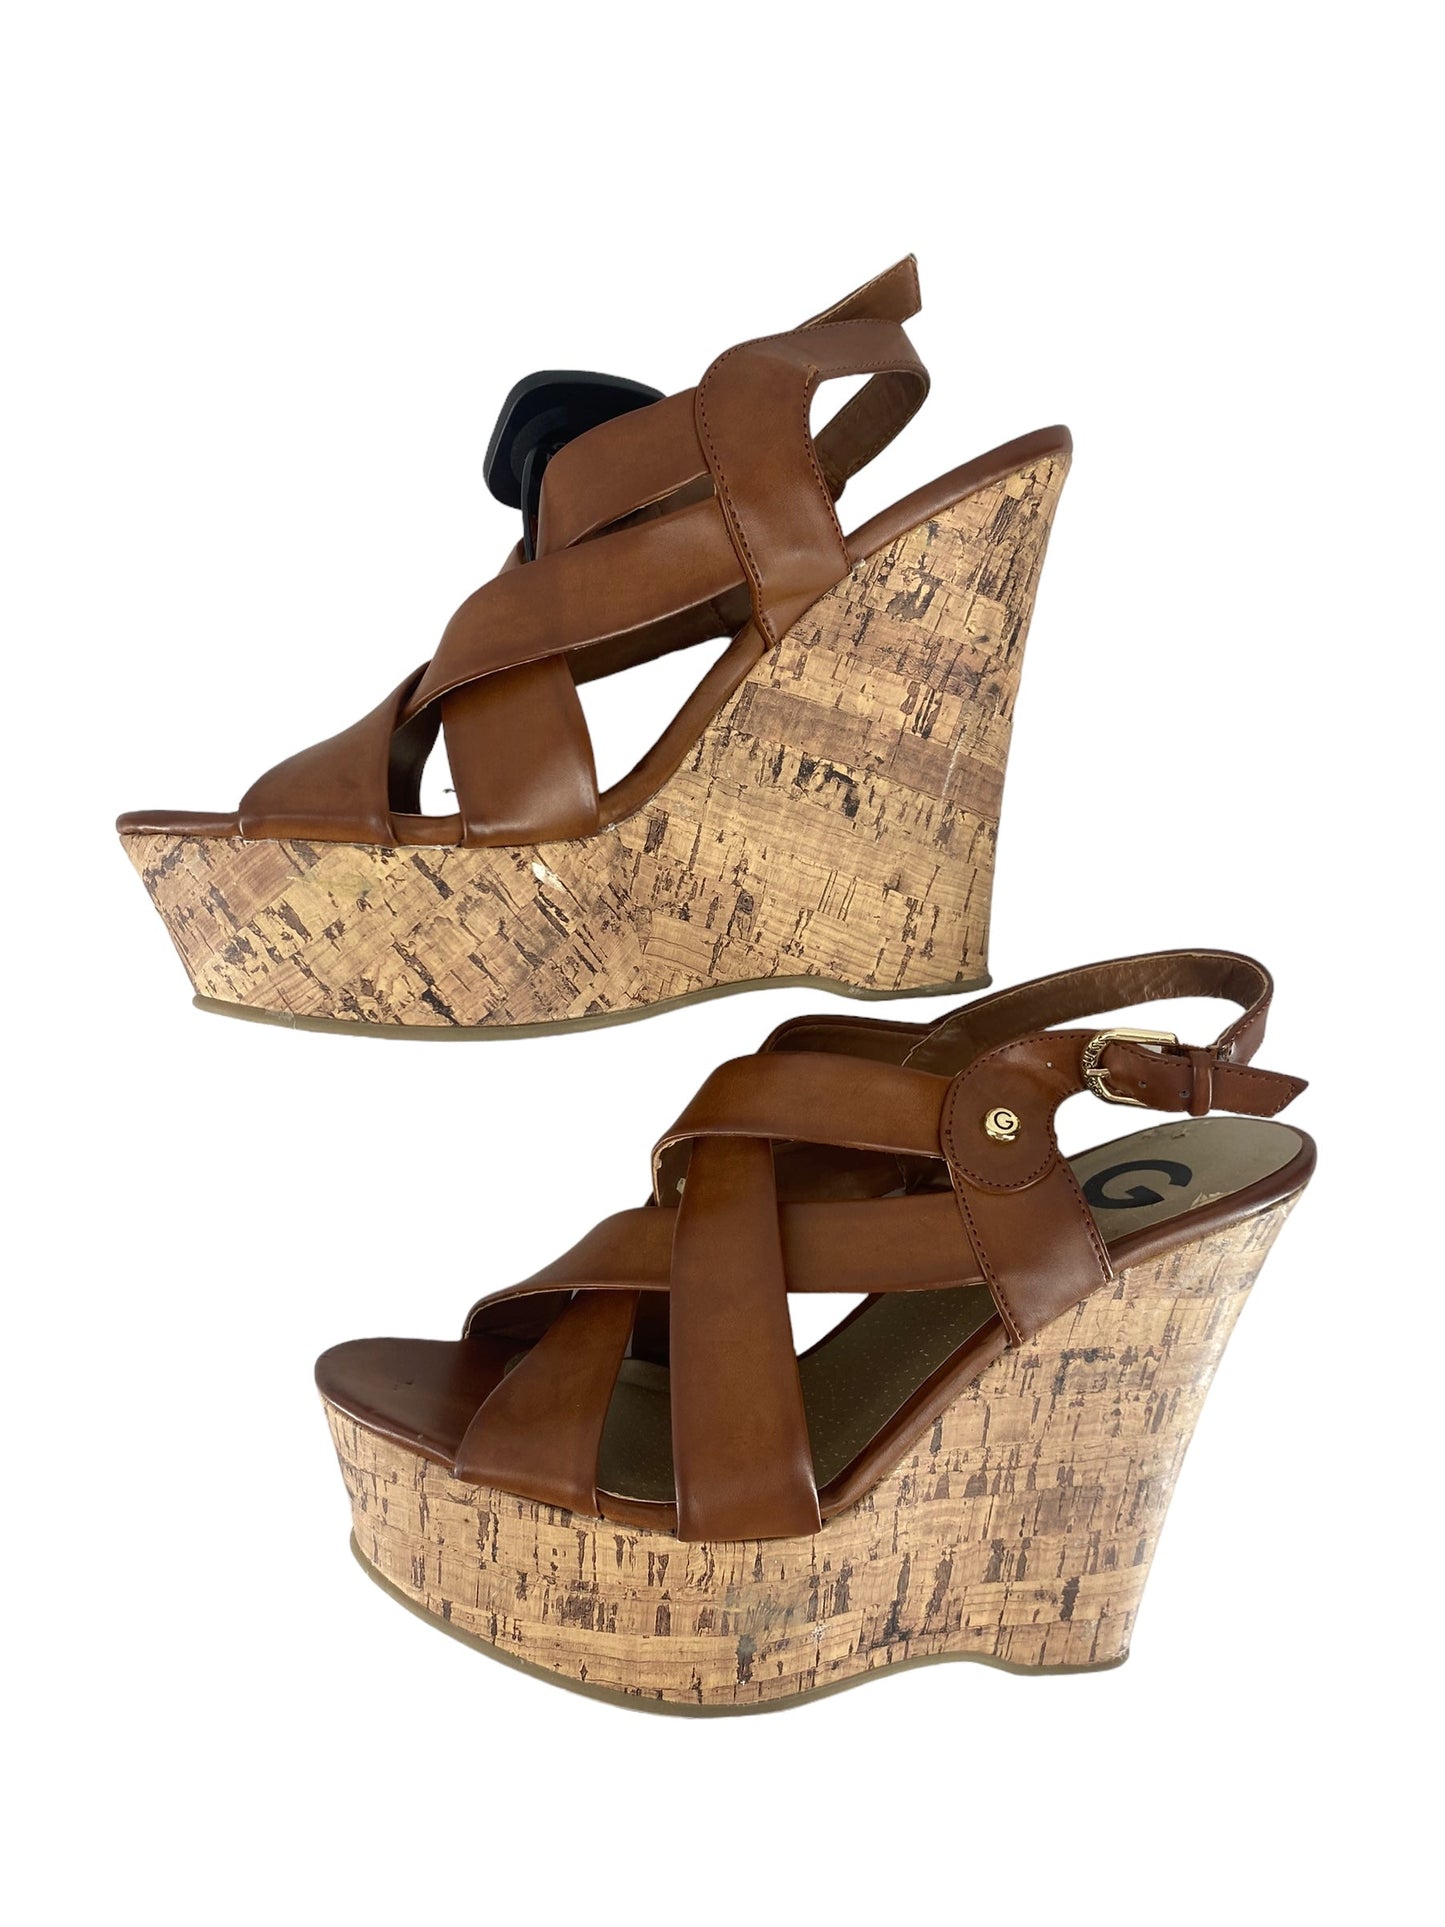 Brown Sandals Heels Platform Guess, Size 9